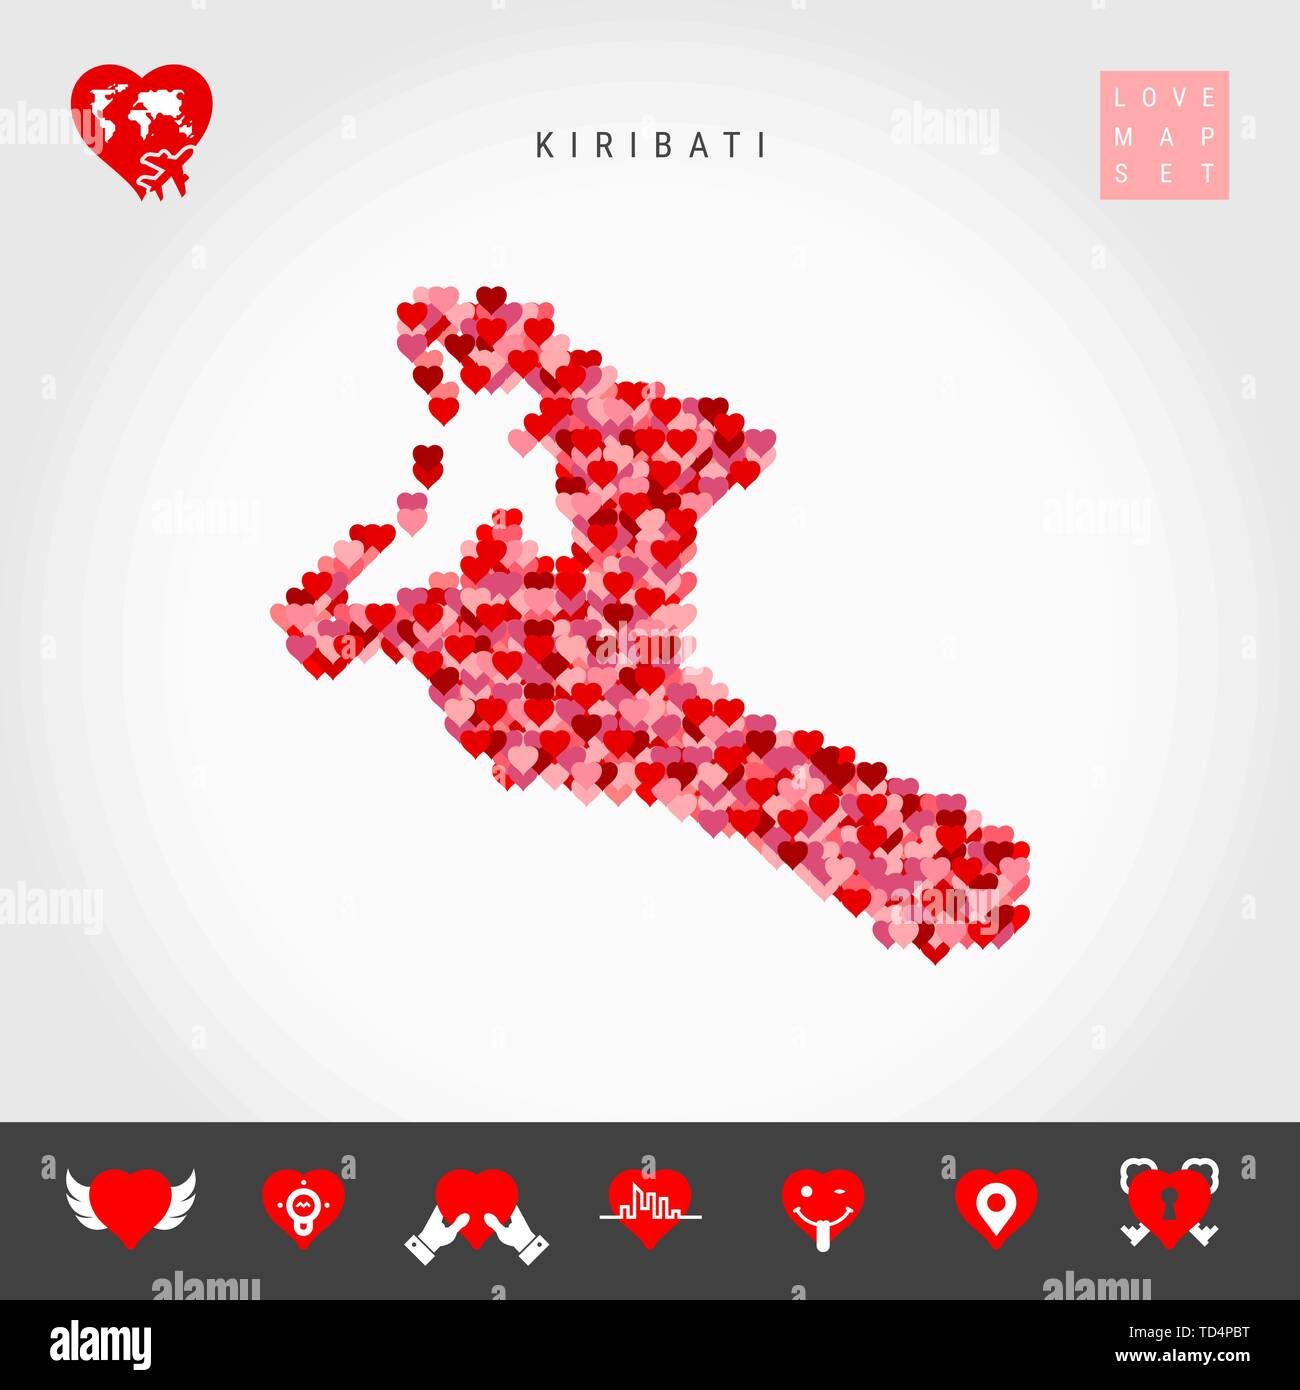 I Love Kiribati. Red and Pink Hearts Pattern Vector Map of Kiribati Isolated on Grey Background. Love Icon Set. Stock Vector